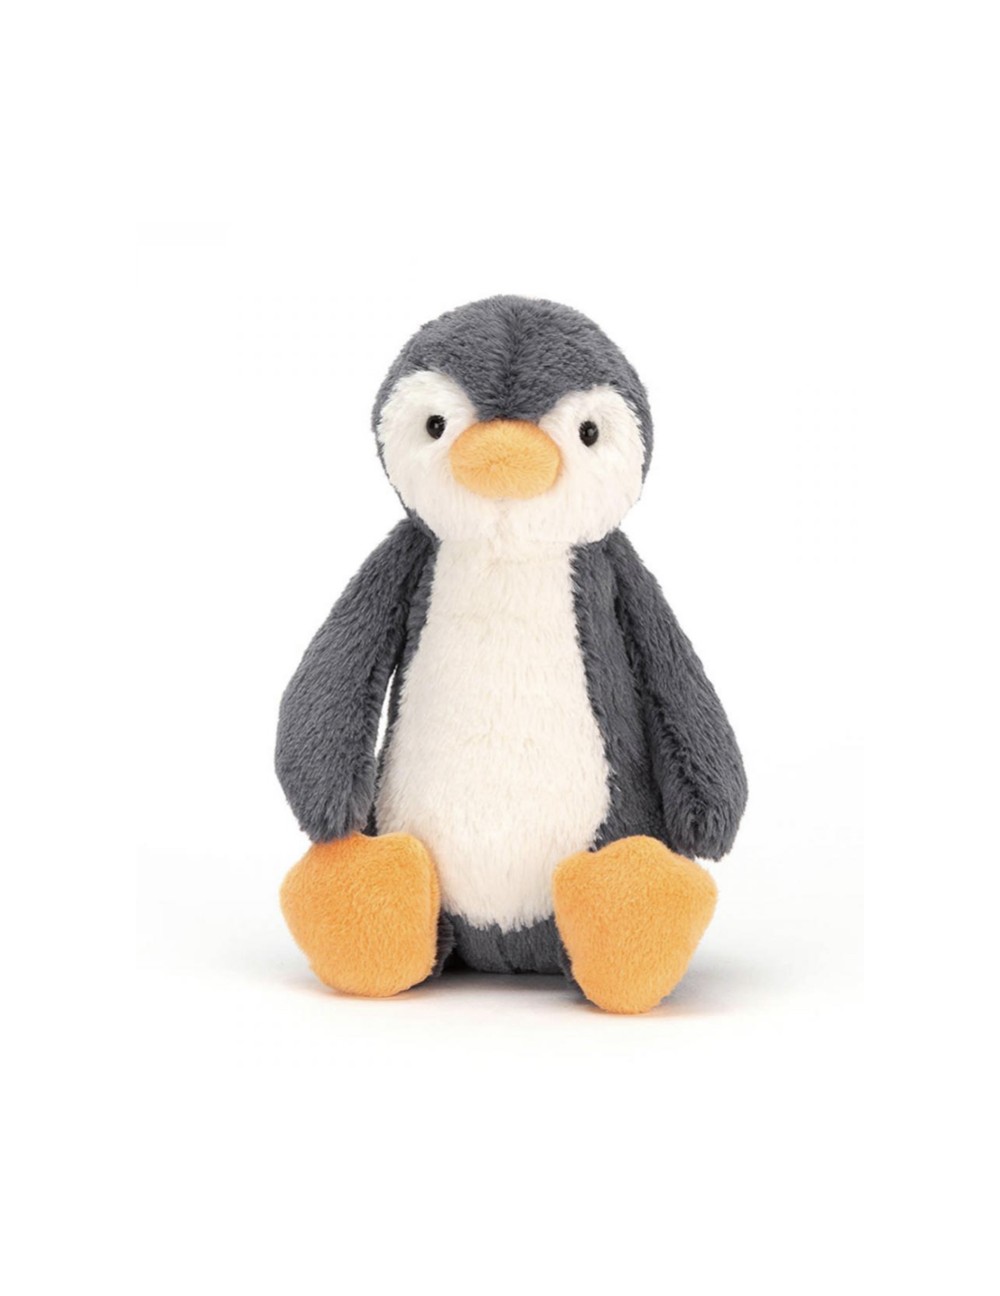 Penguin bashful small